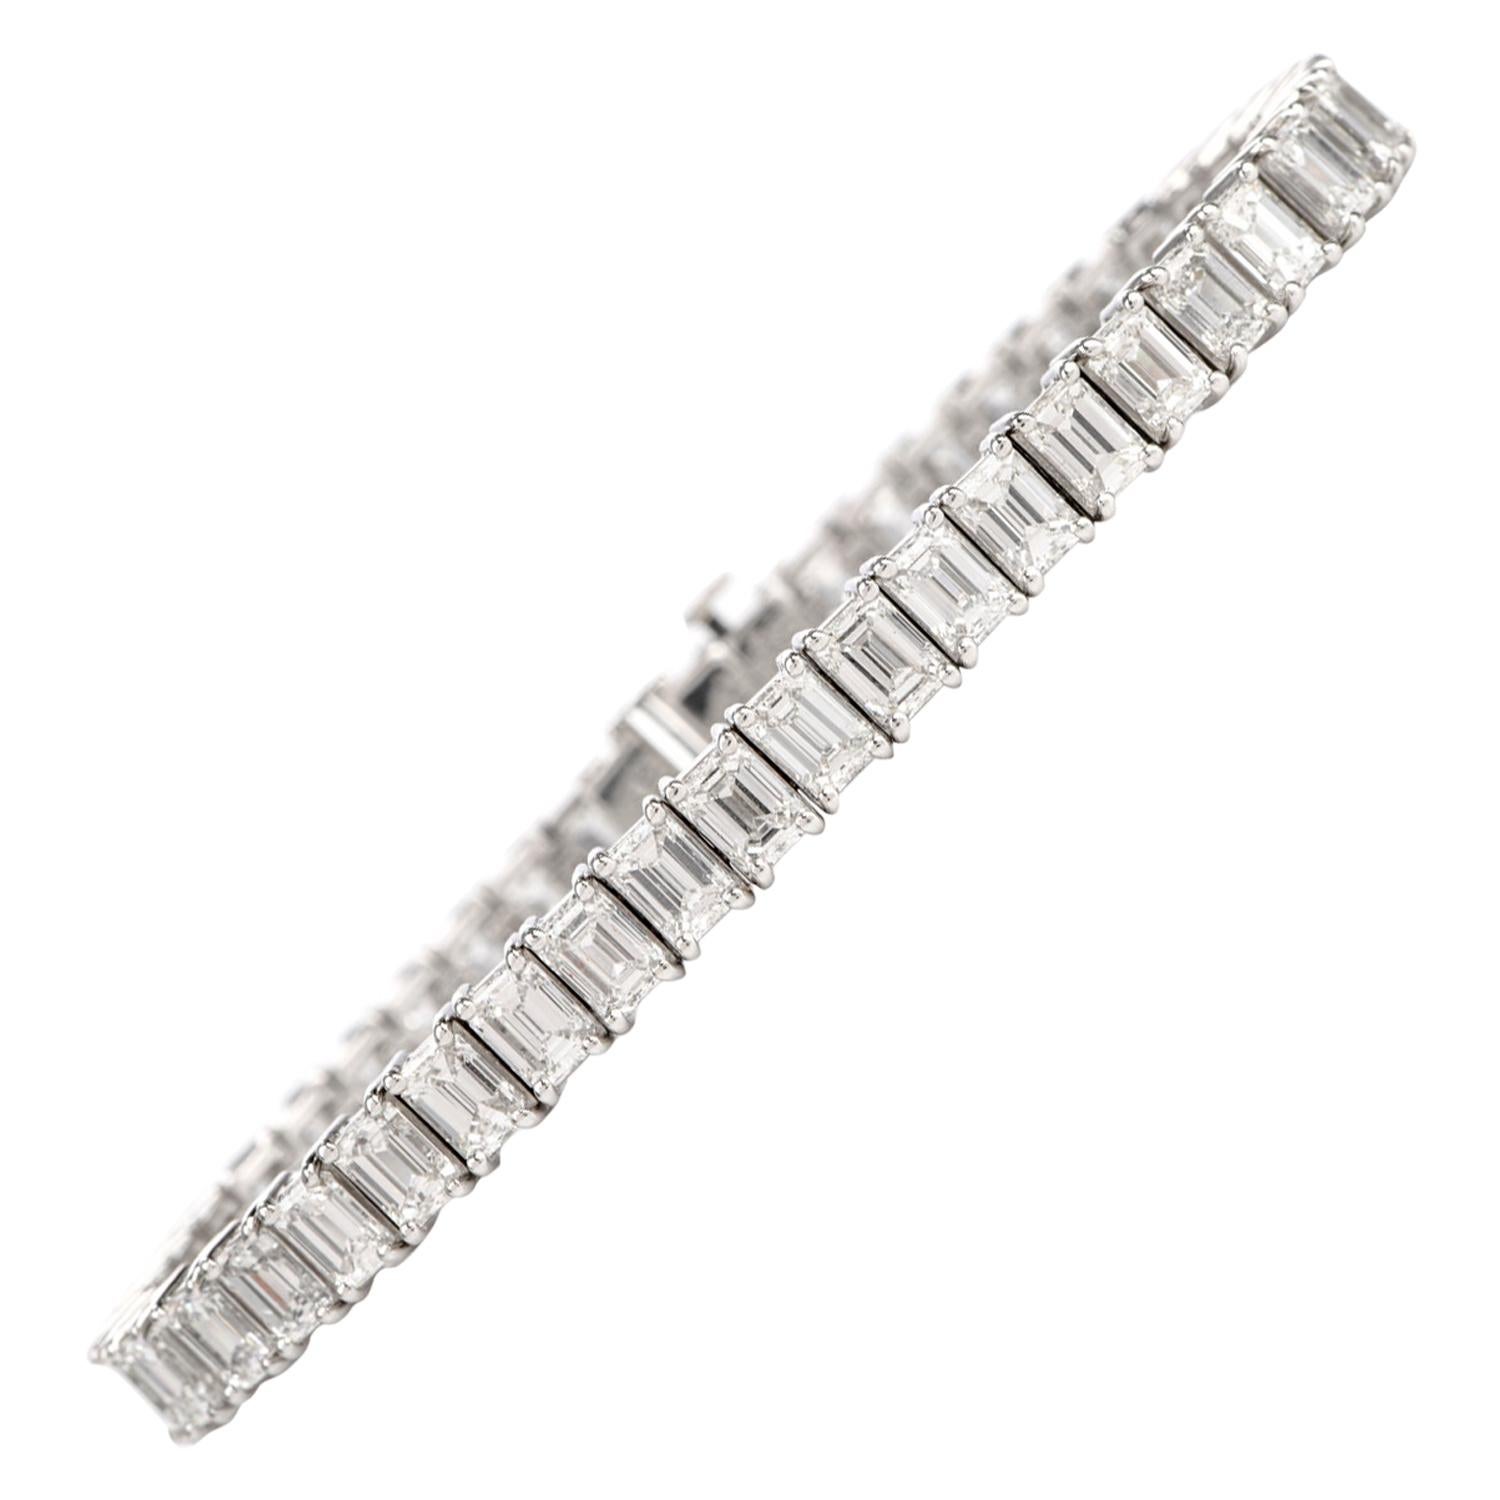 15.11 Carat Emerald-Cut Diamond Platinum Line Tennis Bracelet